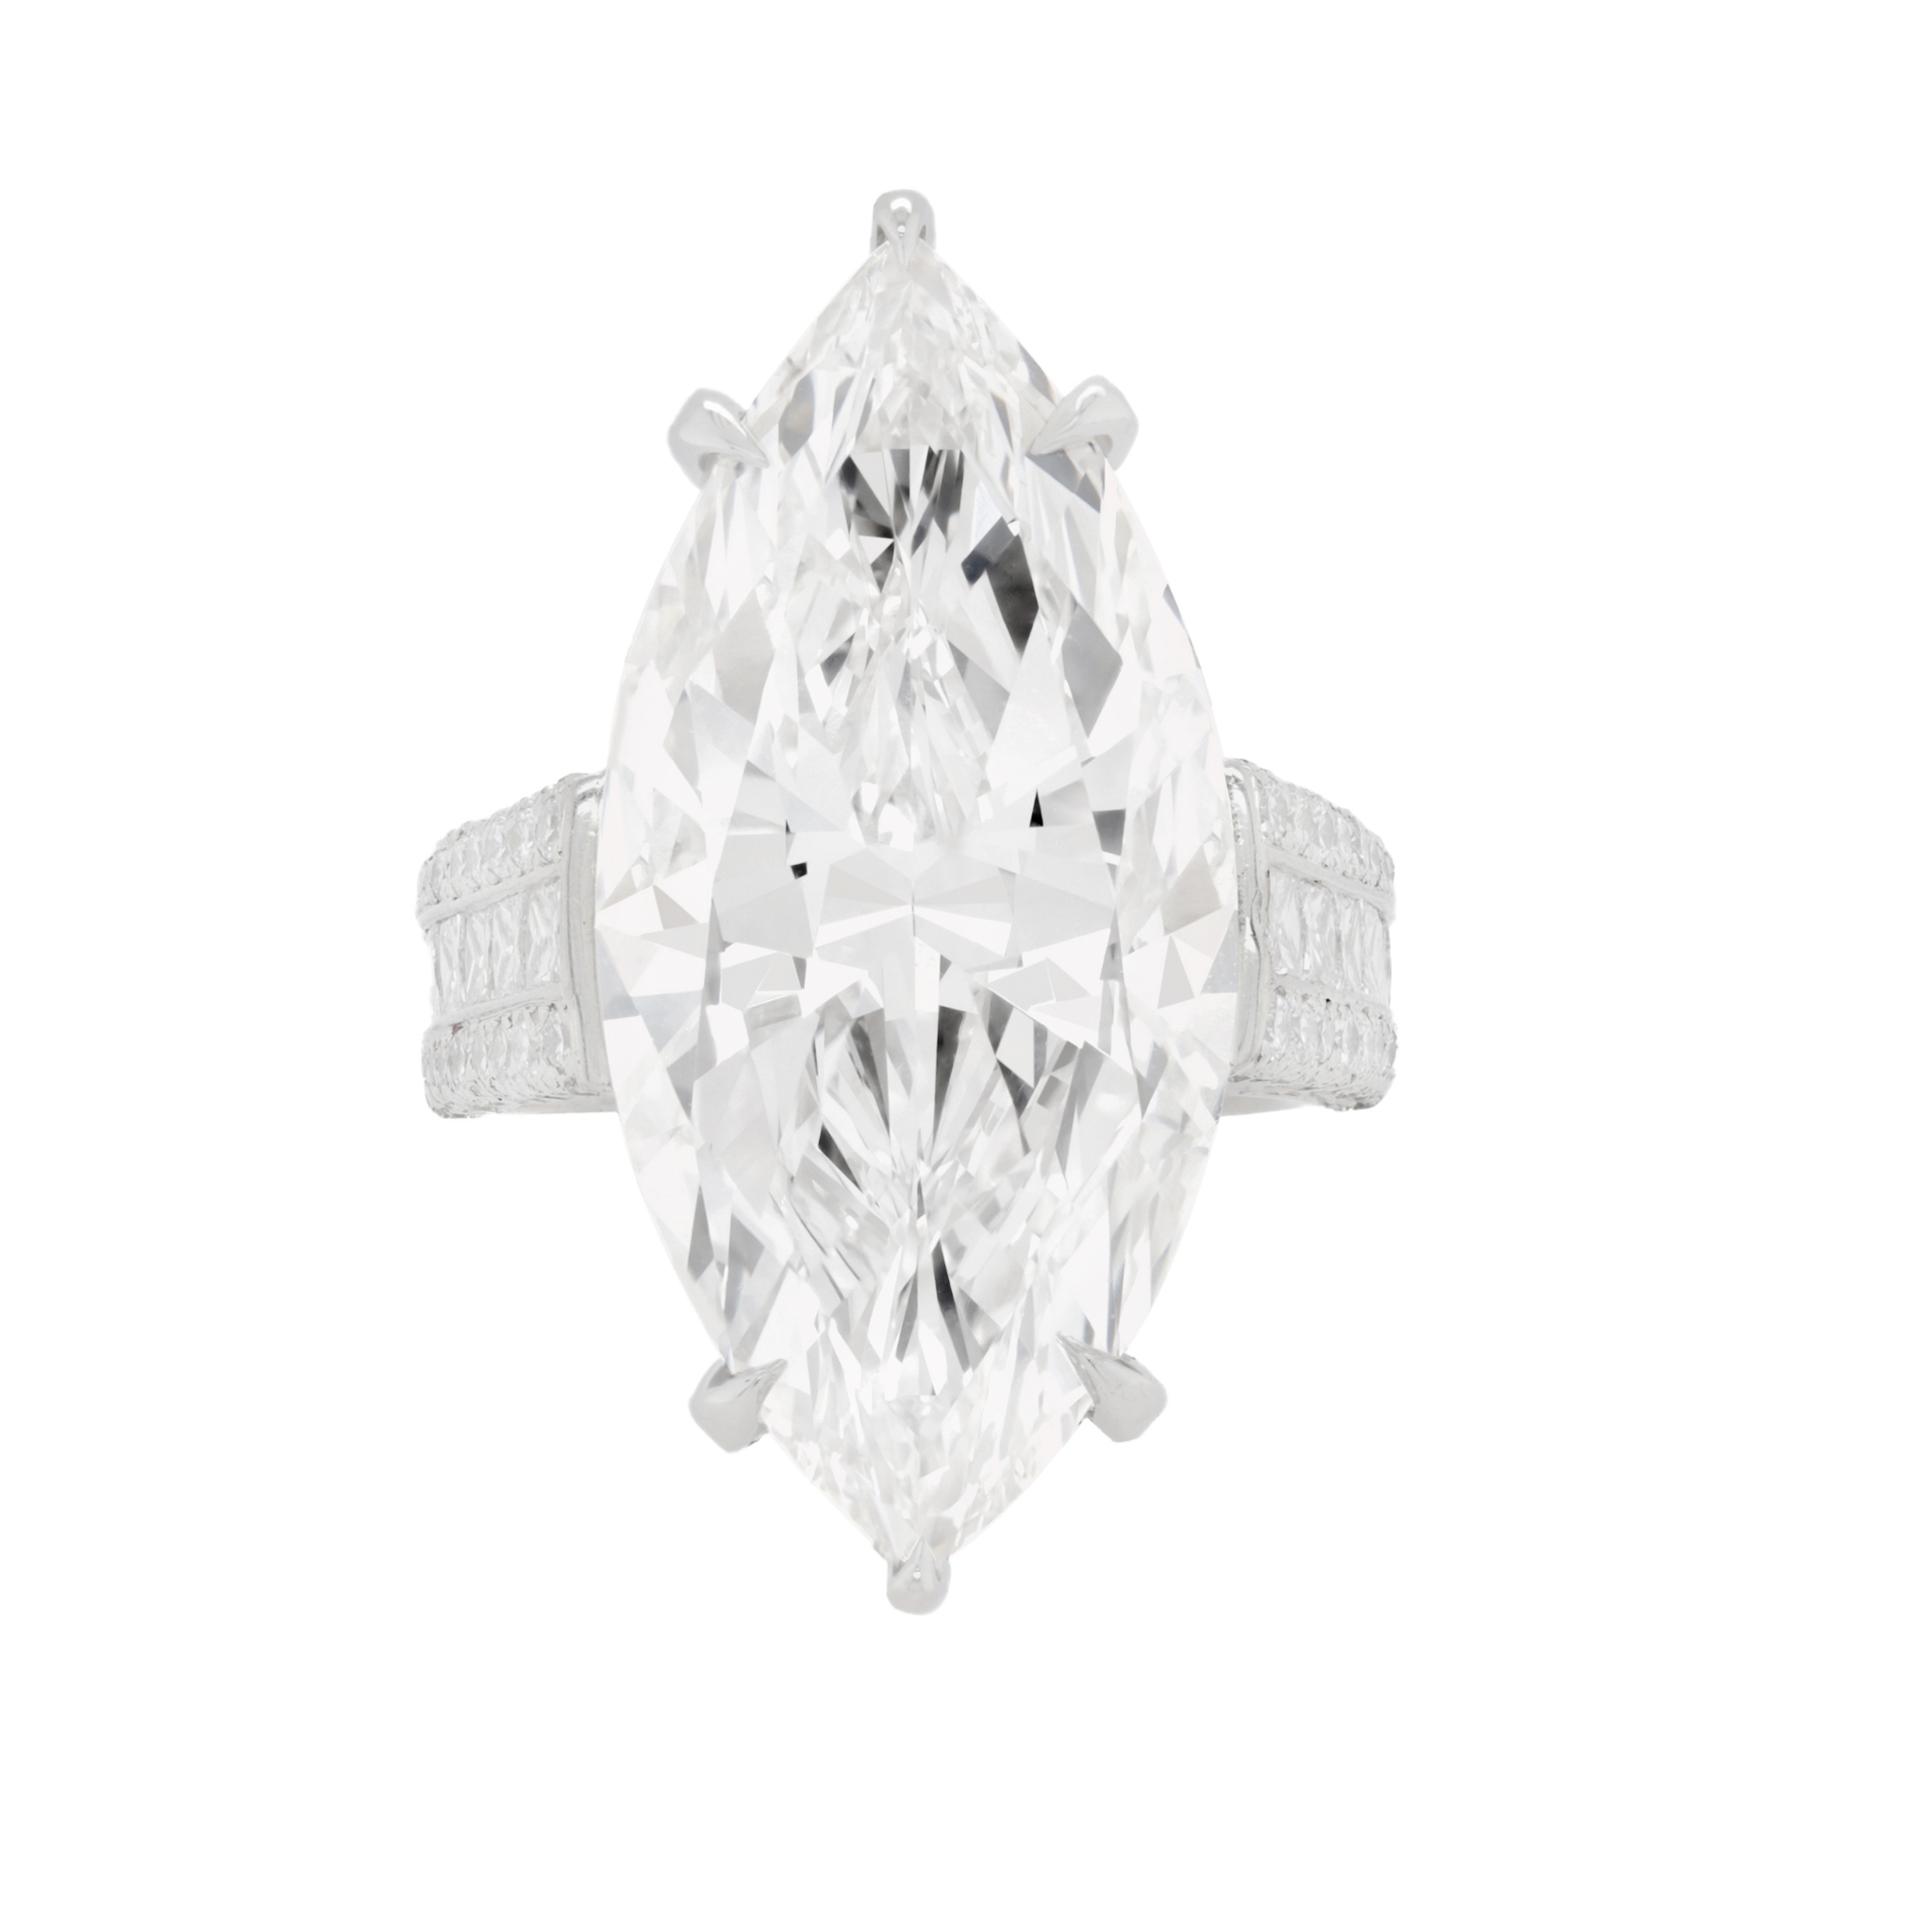 19.85ct Marquise Diamond Ring.jpg